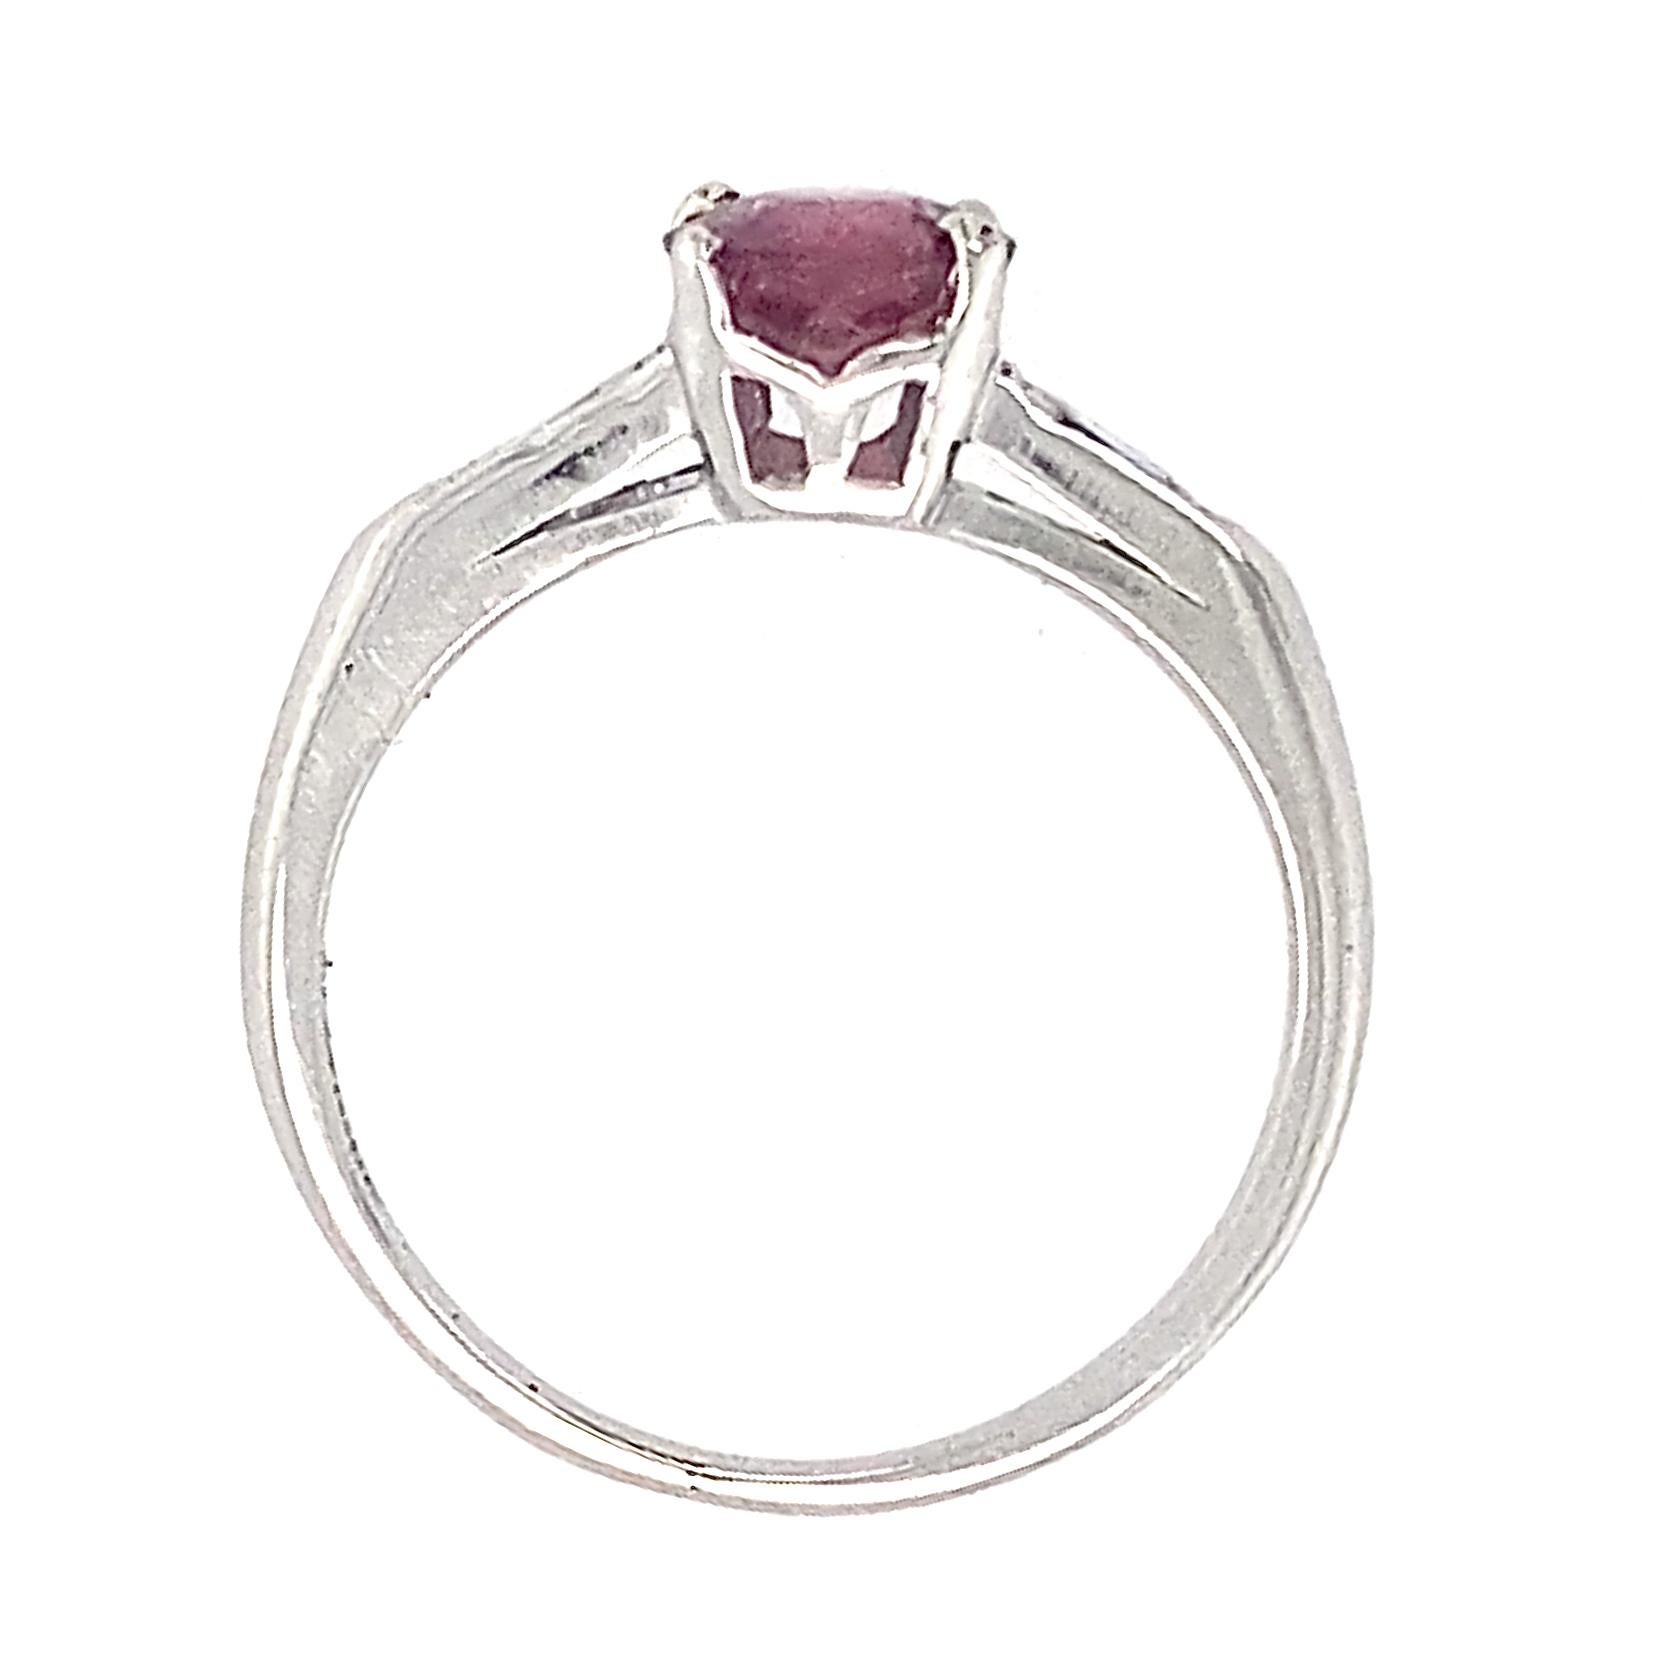 Pink Tourmaline in Deco-Era Platinum Engagement Ring with Diamond Baguettes 4